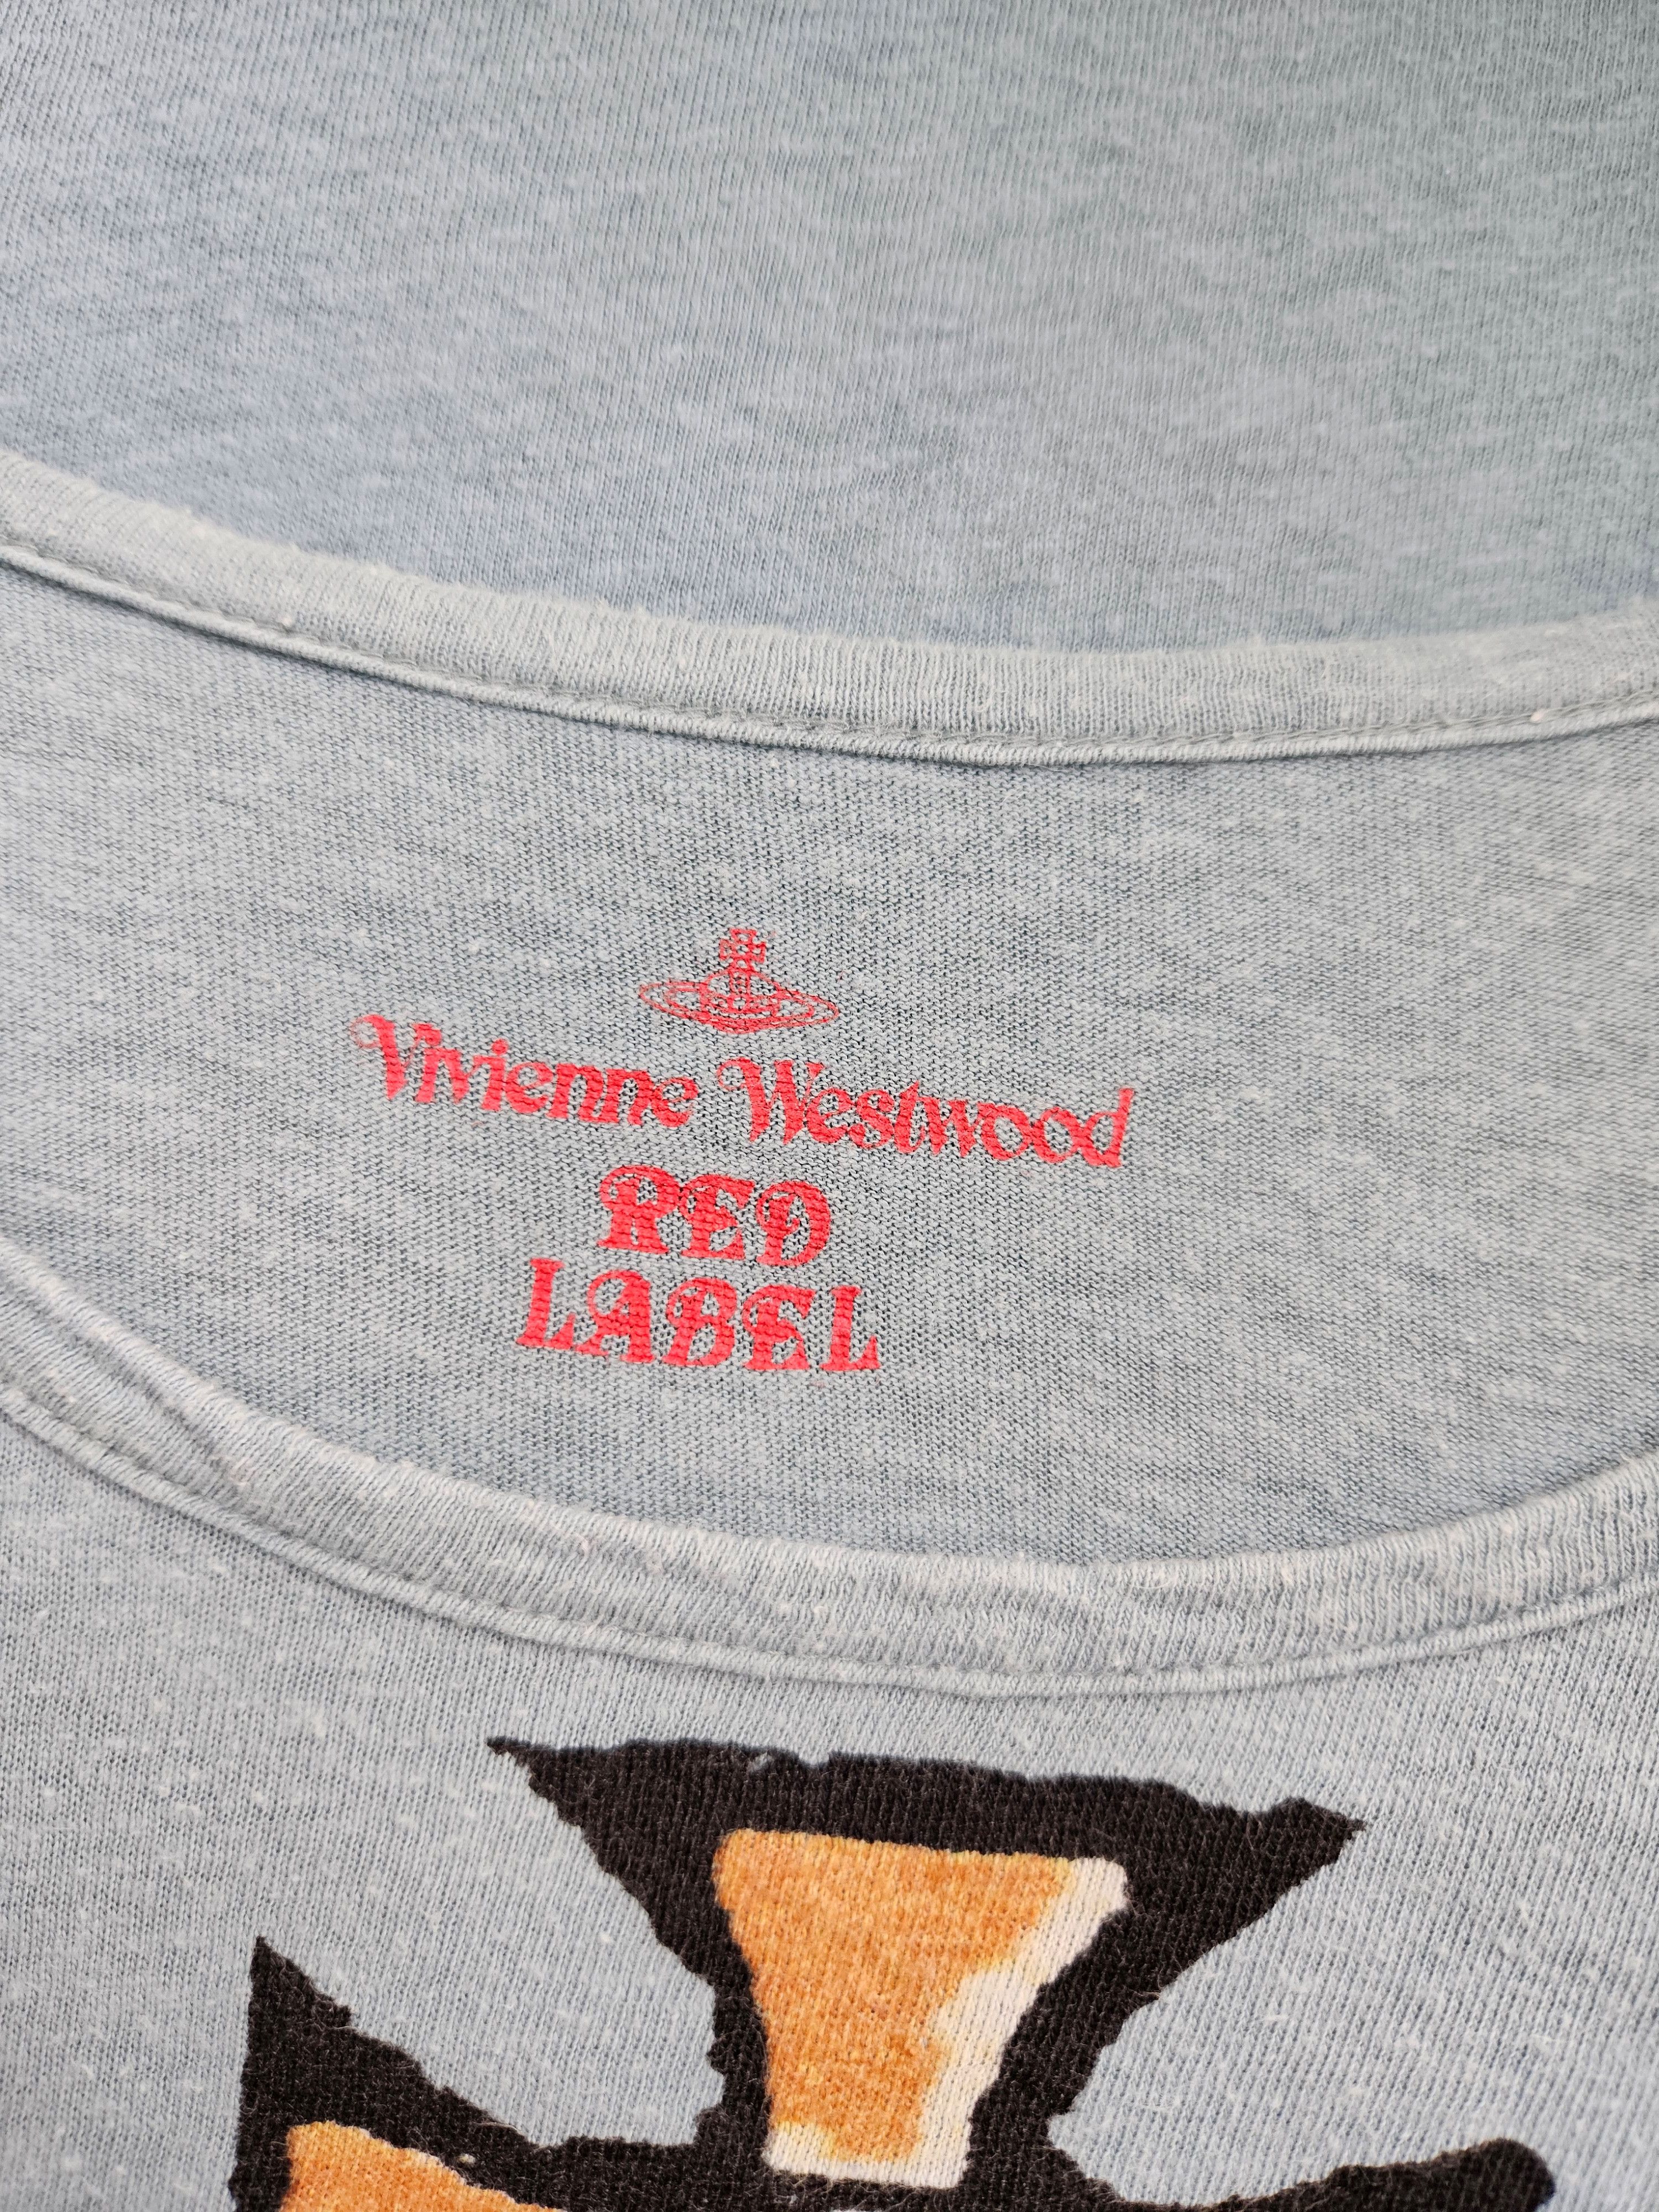 Vivienne Westwood Red Label Bird Peace Orb Shirt - 4